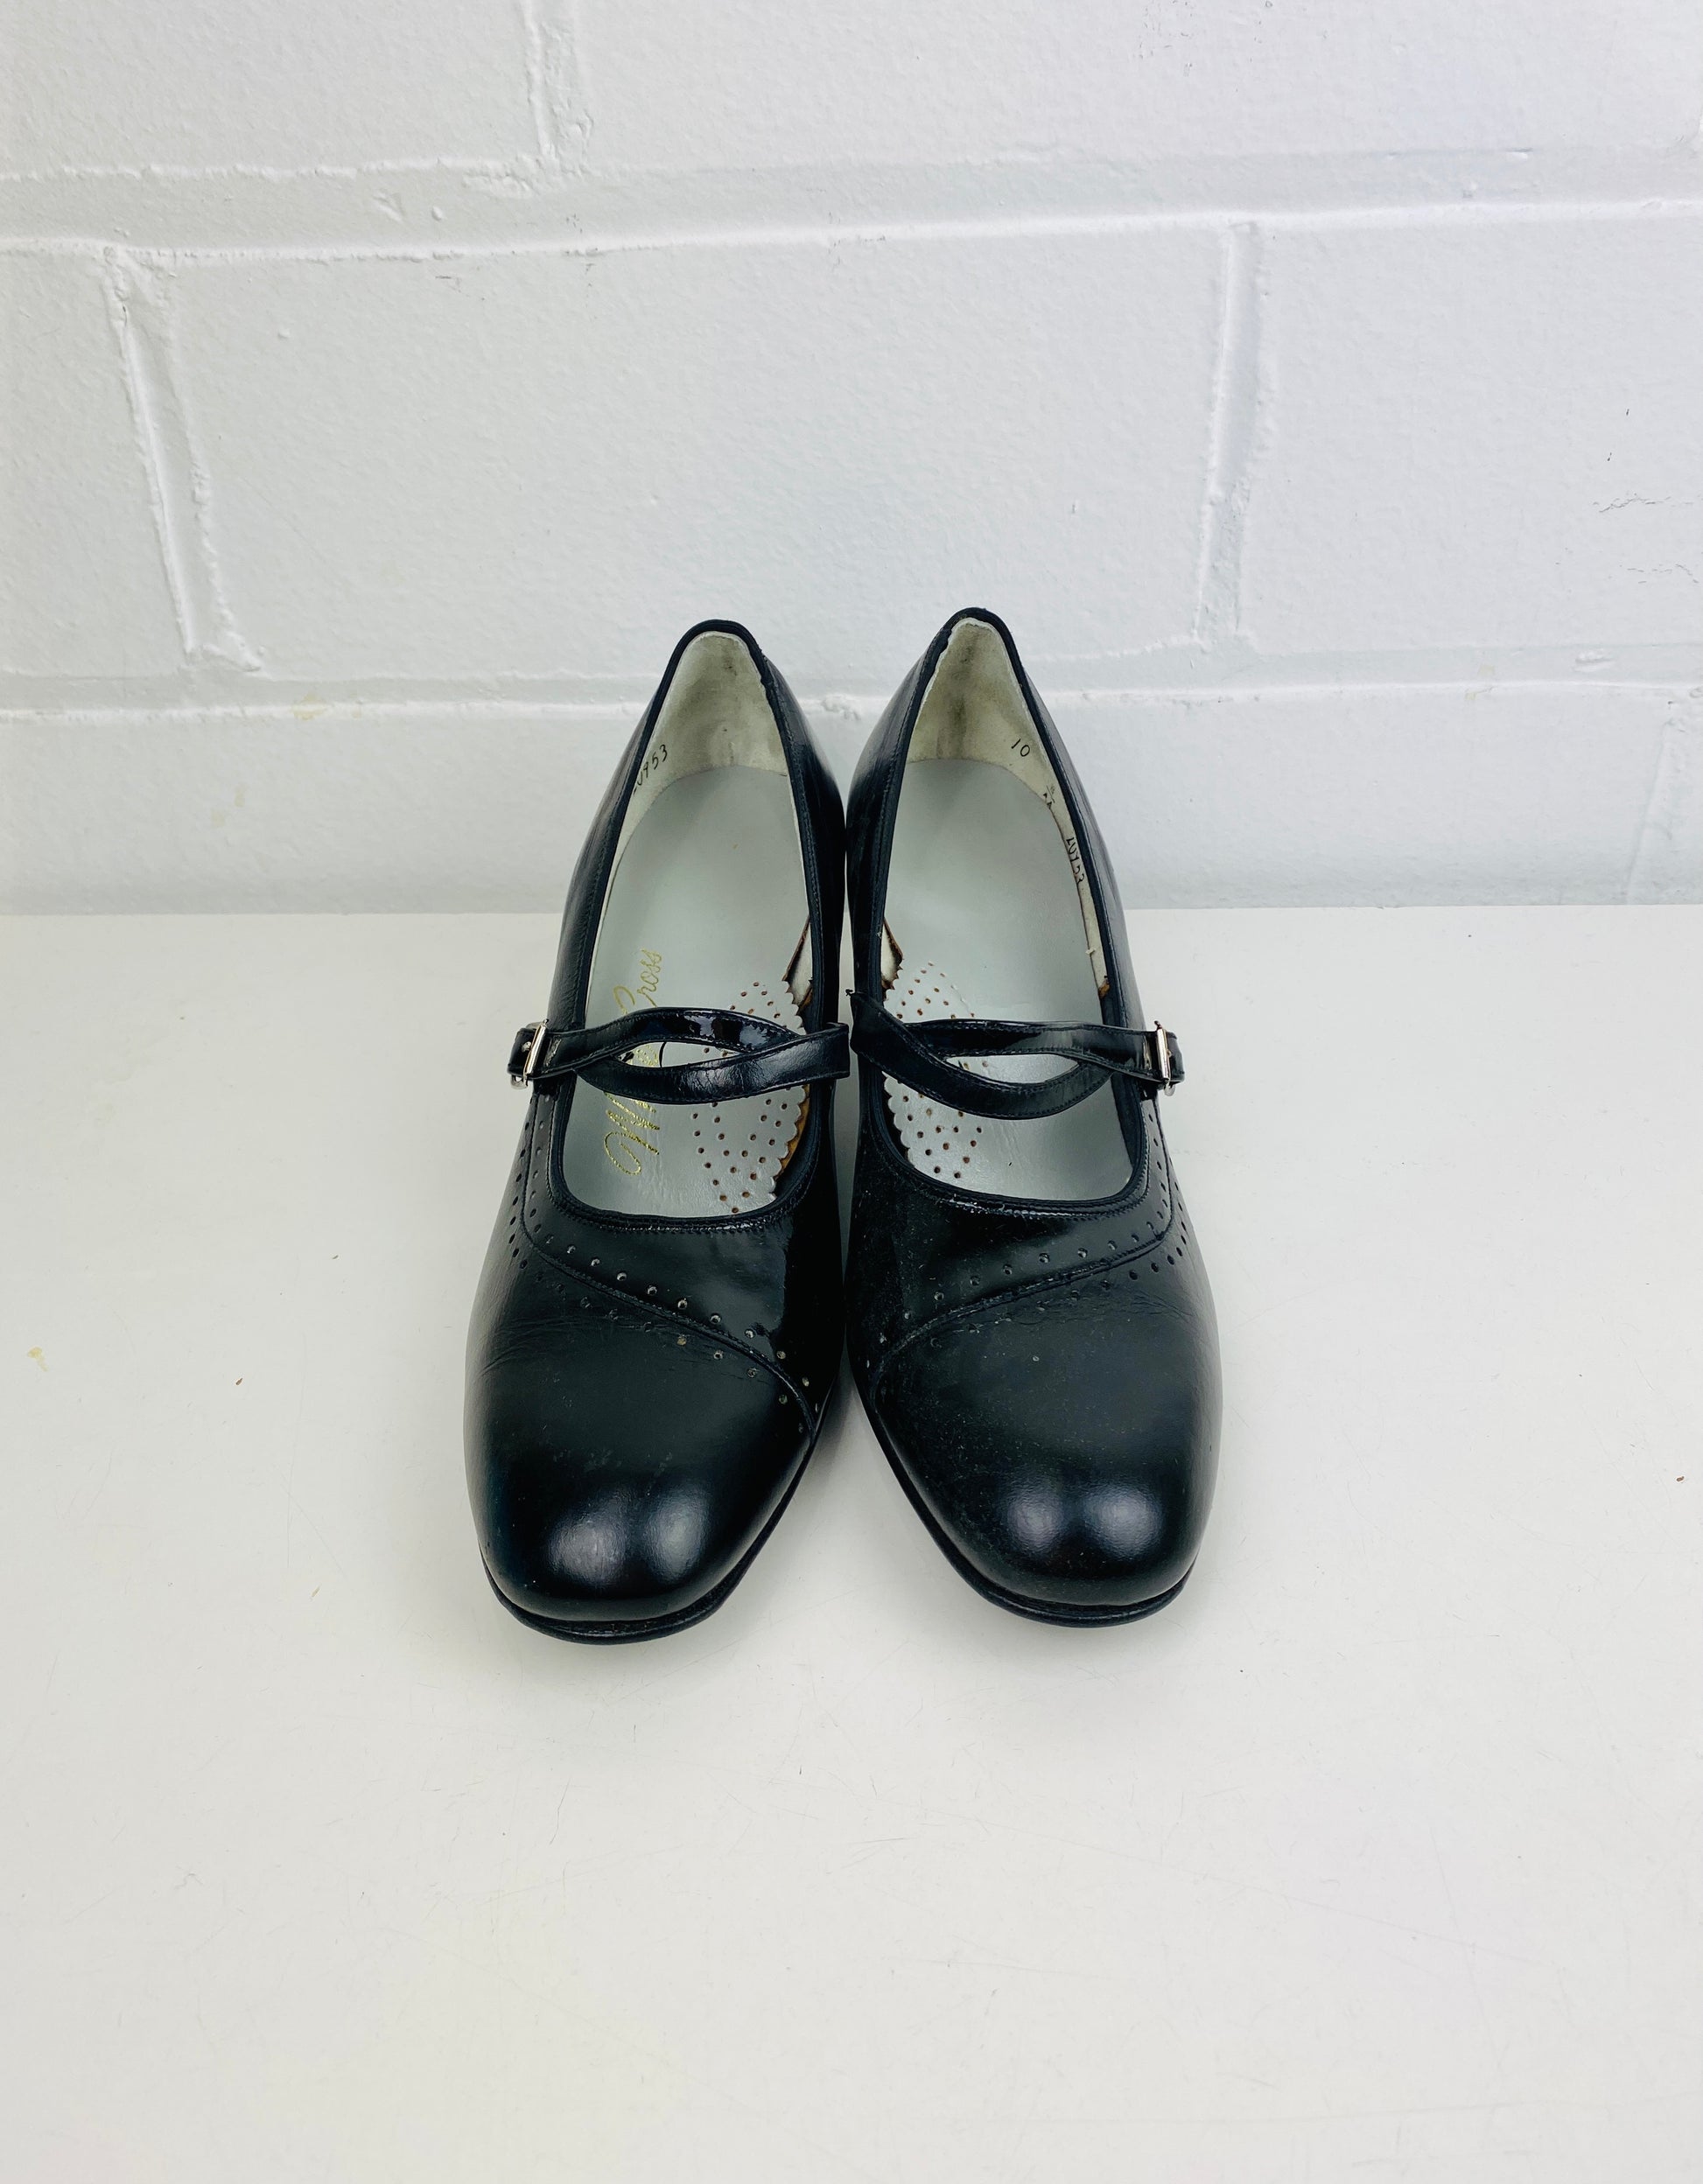 Vintage Deadstock Shoes, Women's 1980s Black Leather Mid-Heel Pump's, NOS